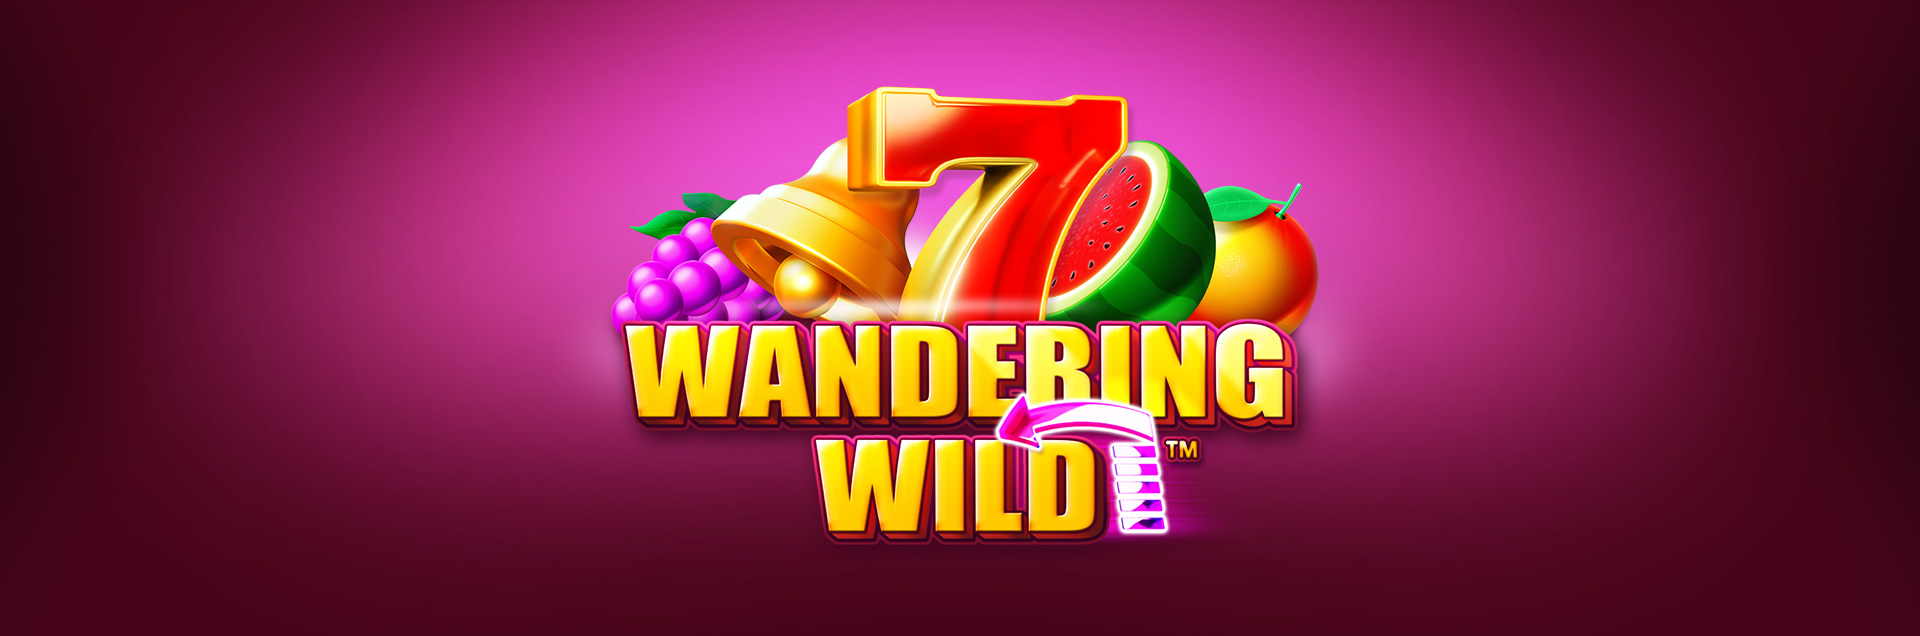 Wandering Wild games header